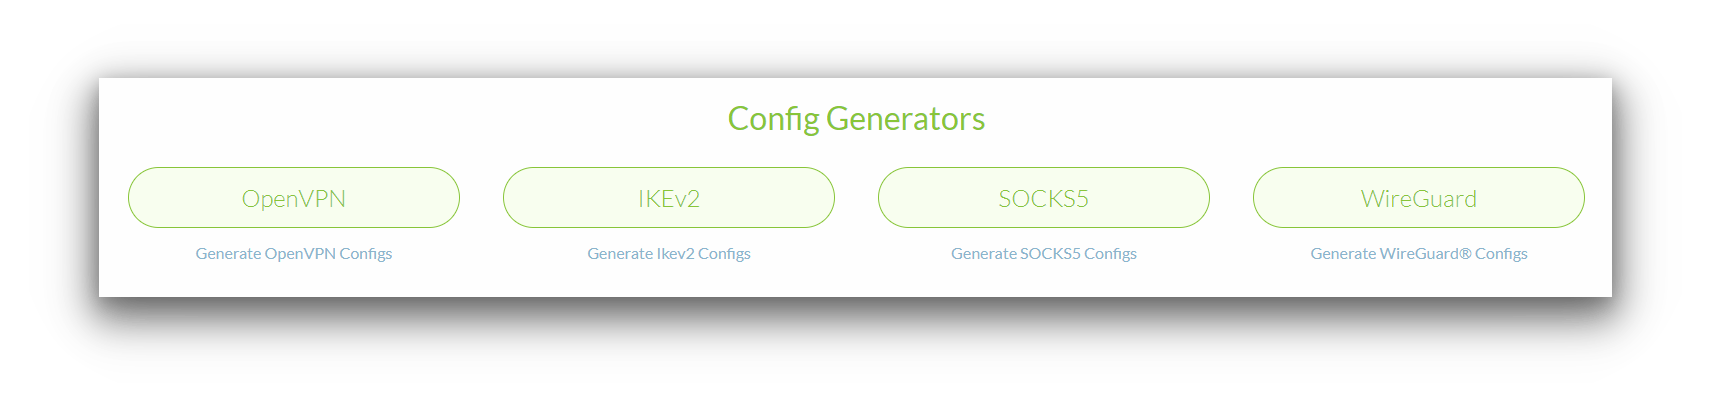 Windscribe's config generators